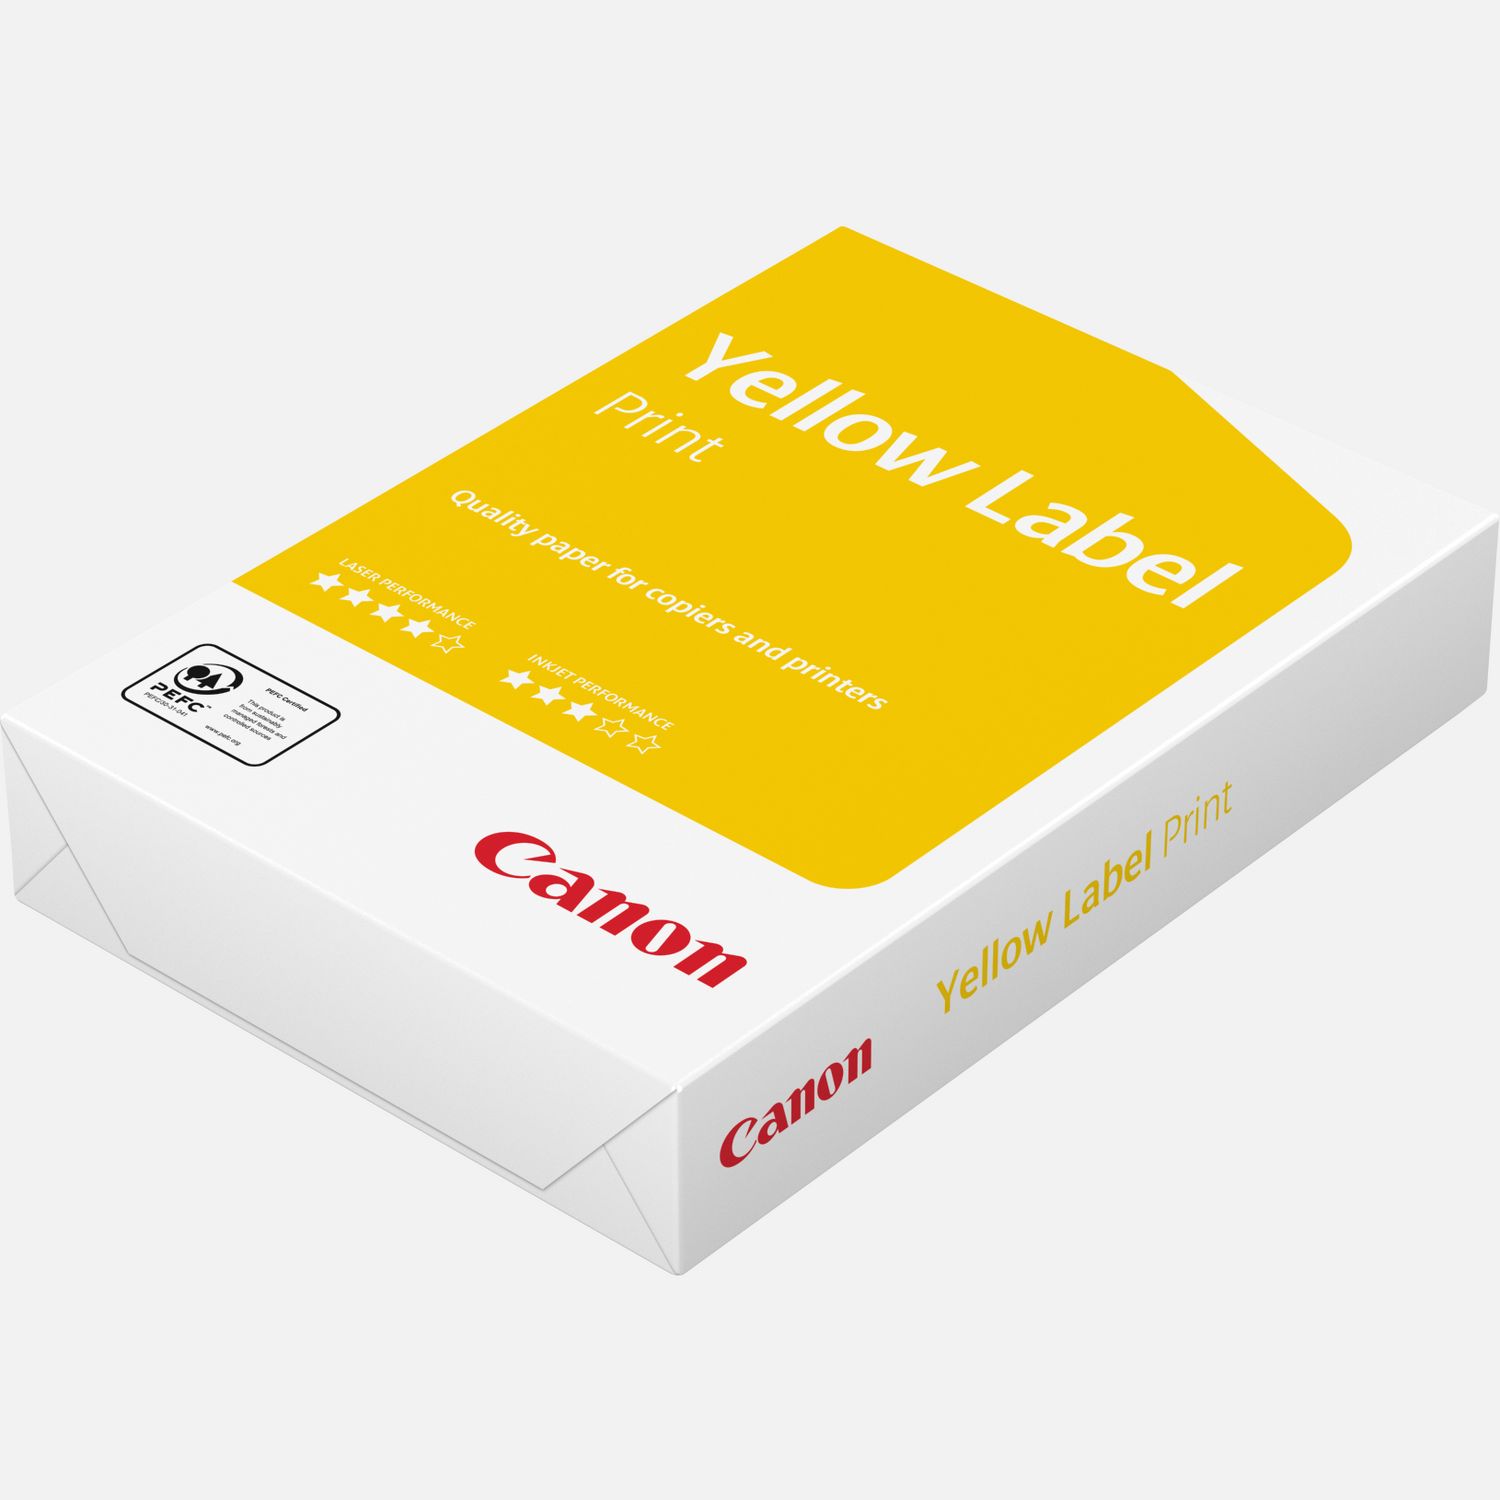 Rouwen leven Contract Canon Yellow Label 80 g/m² A4 papier – 500 vel — Canon Nederland Store